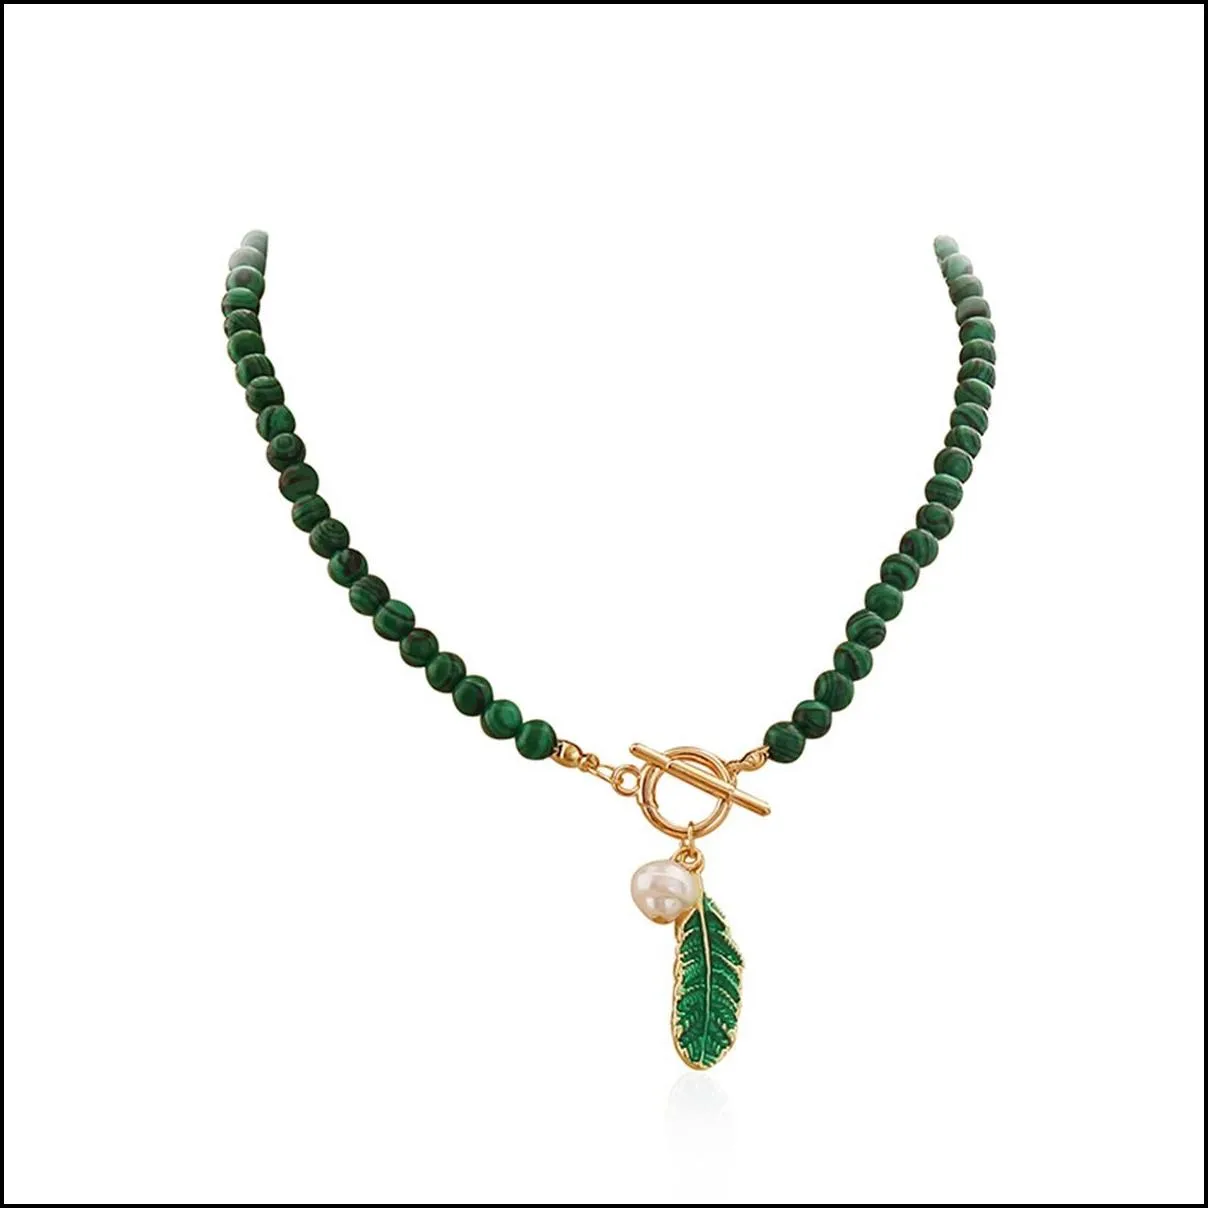 adjustable personality bracelet necklaces set lake green beads peal beaded bracelets necklace set for men women